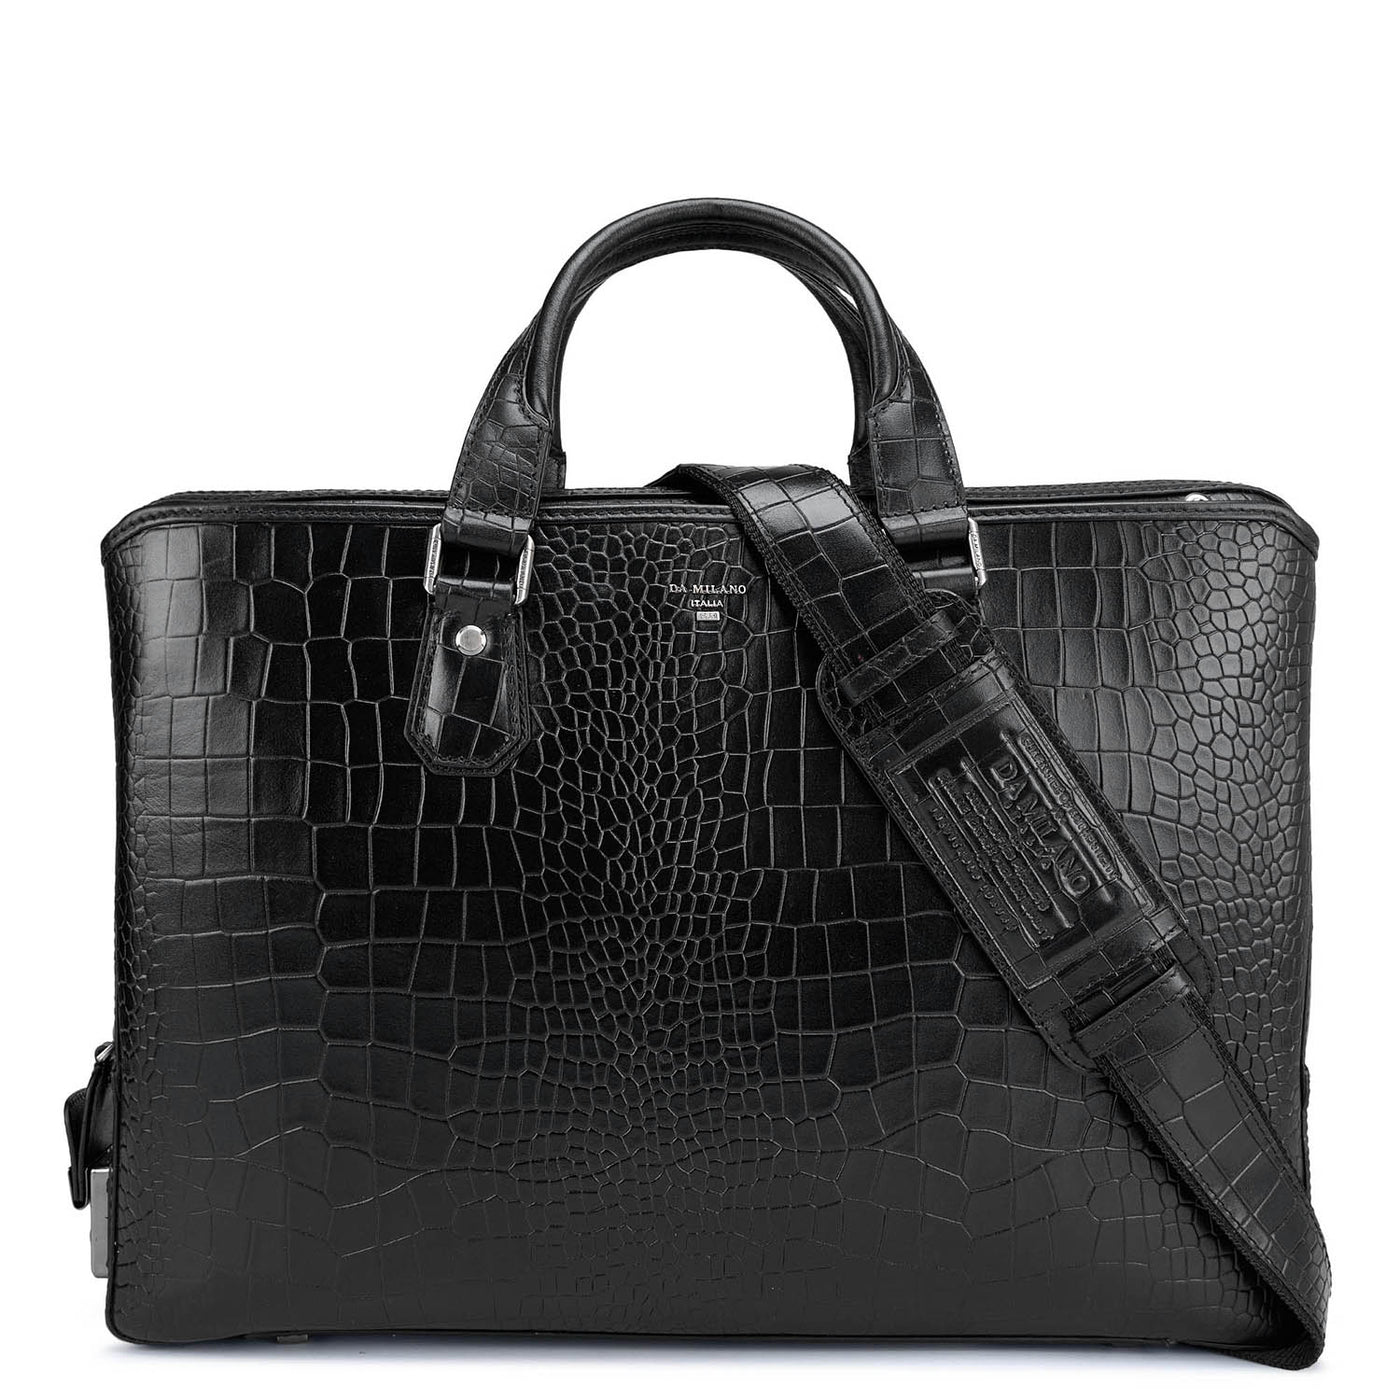 Black Croco Leather Laptop Bag - Upto 15"